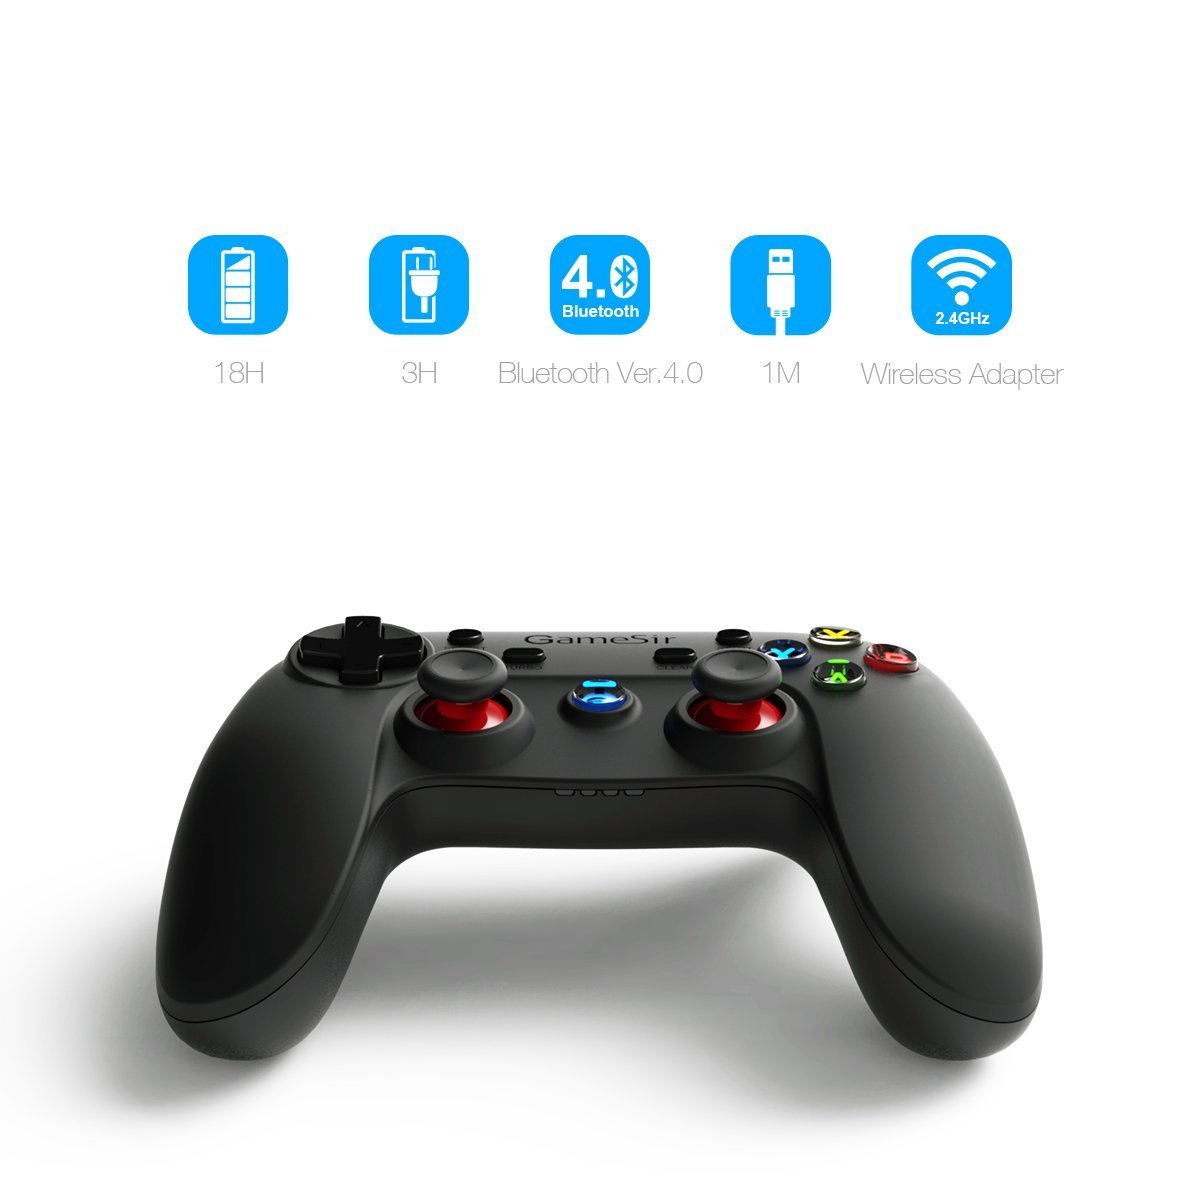 Fabriek Harde ring laten we het doen GameSir G3s Bluetooth Wireless Controller - Hardware Review